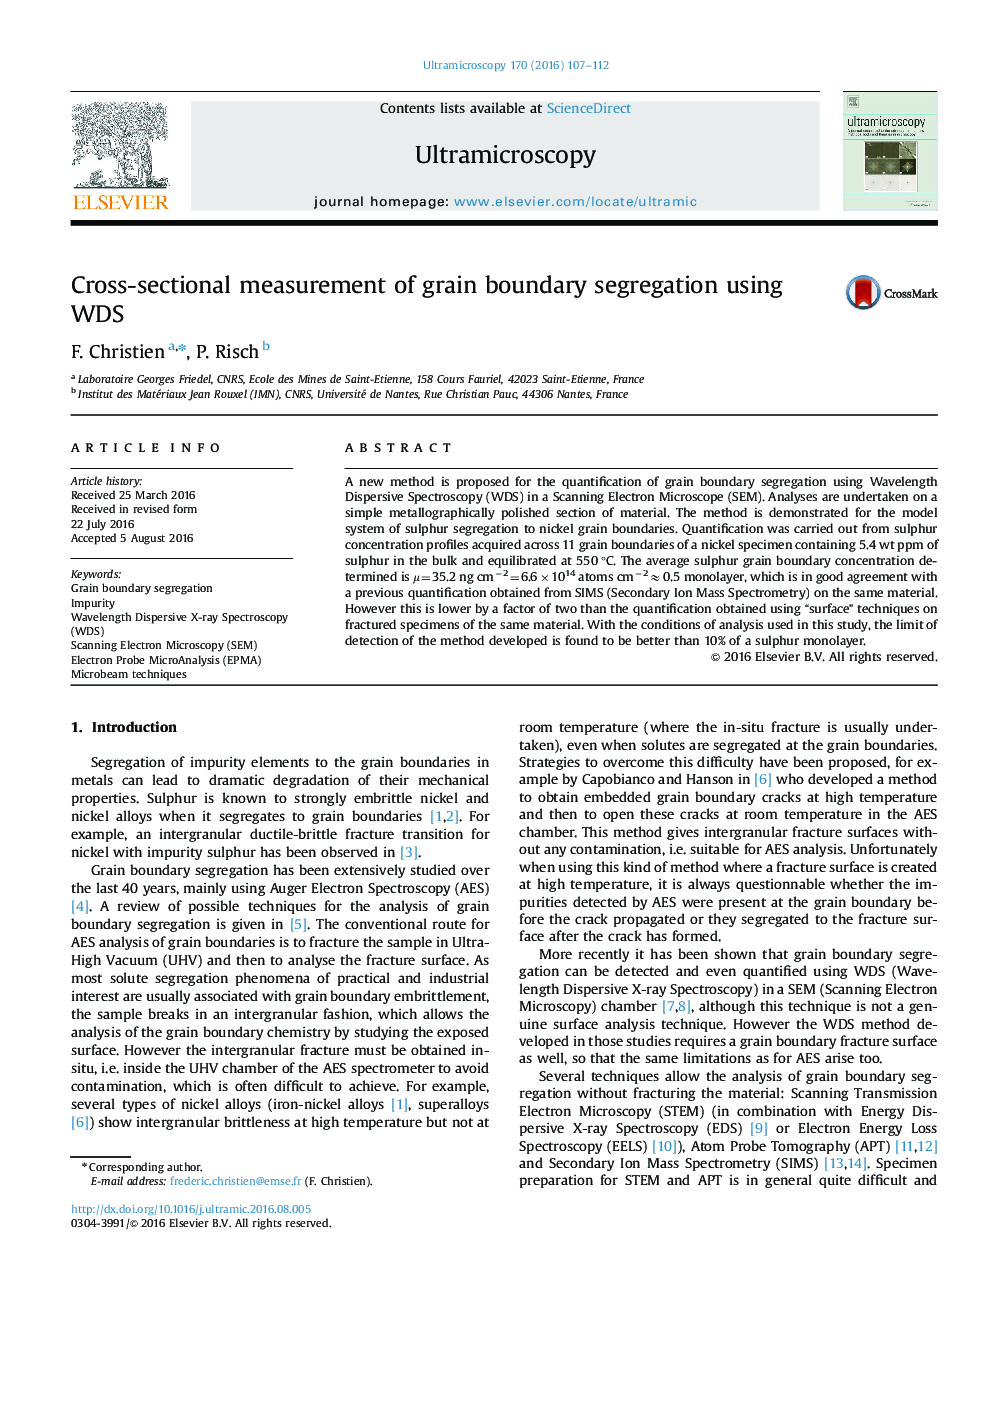 Cross-sectional measurement of grain boundary segregation using WDS